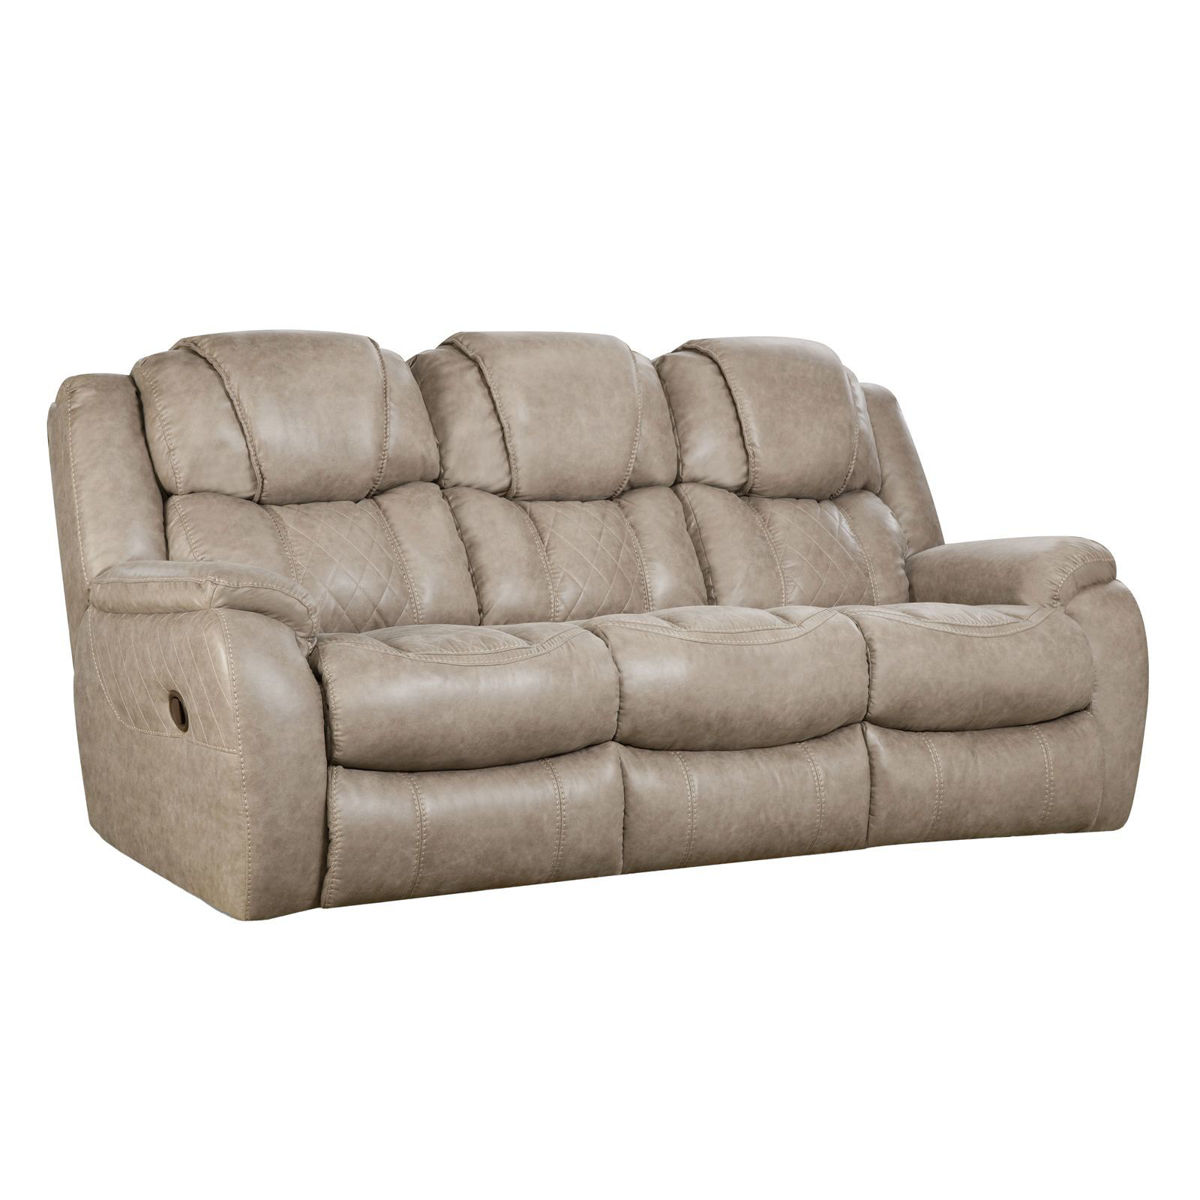 Picture of Daytona Mushroom Recliner Sofa